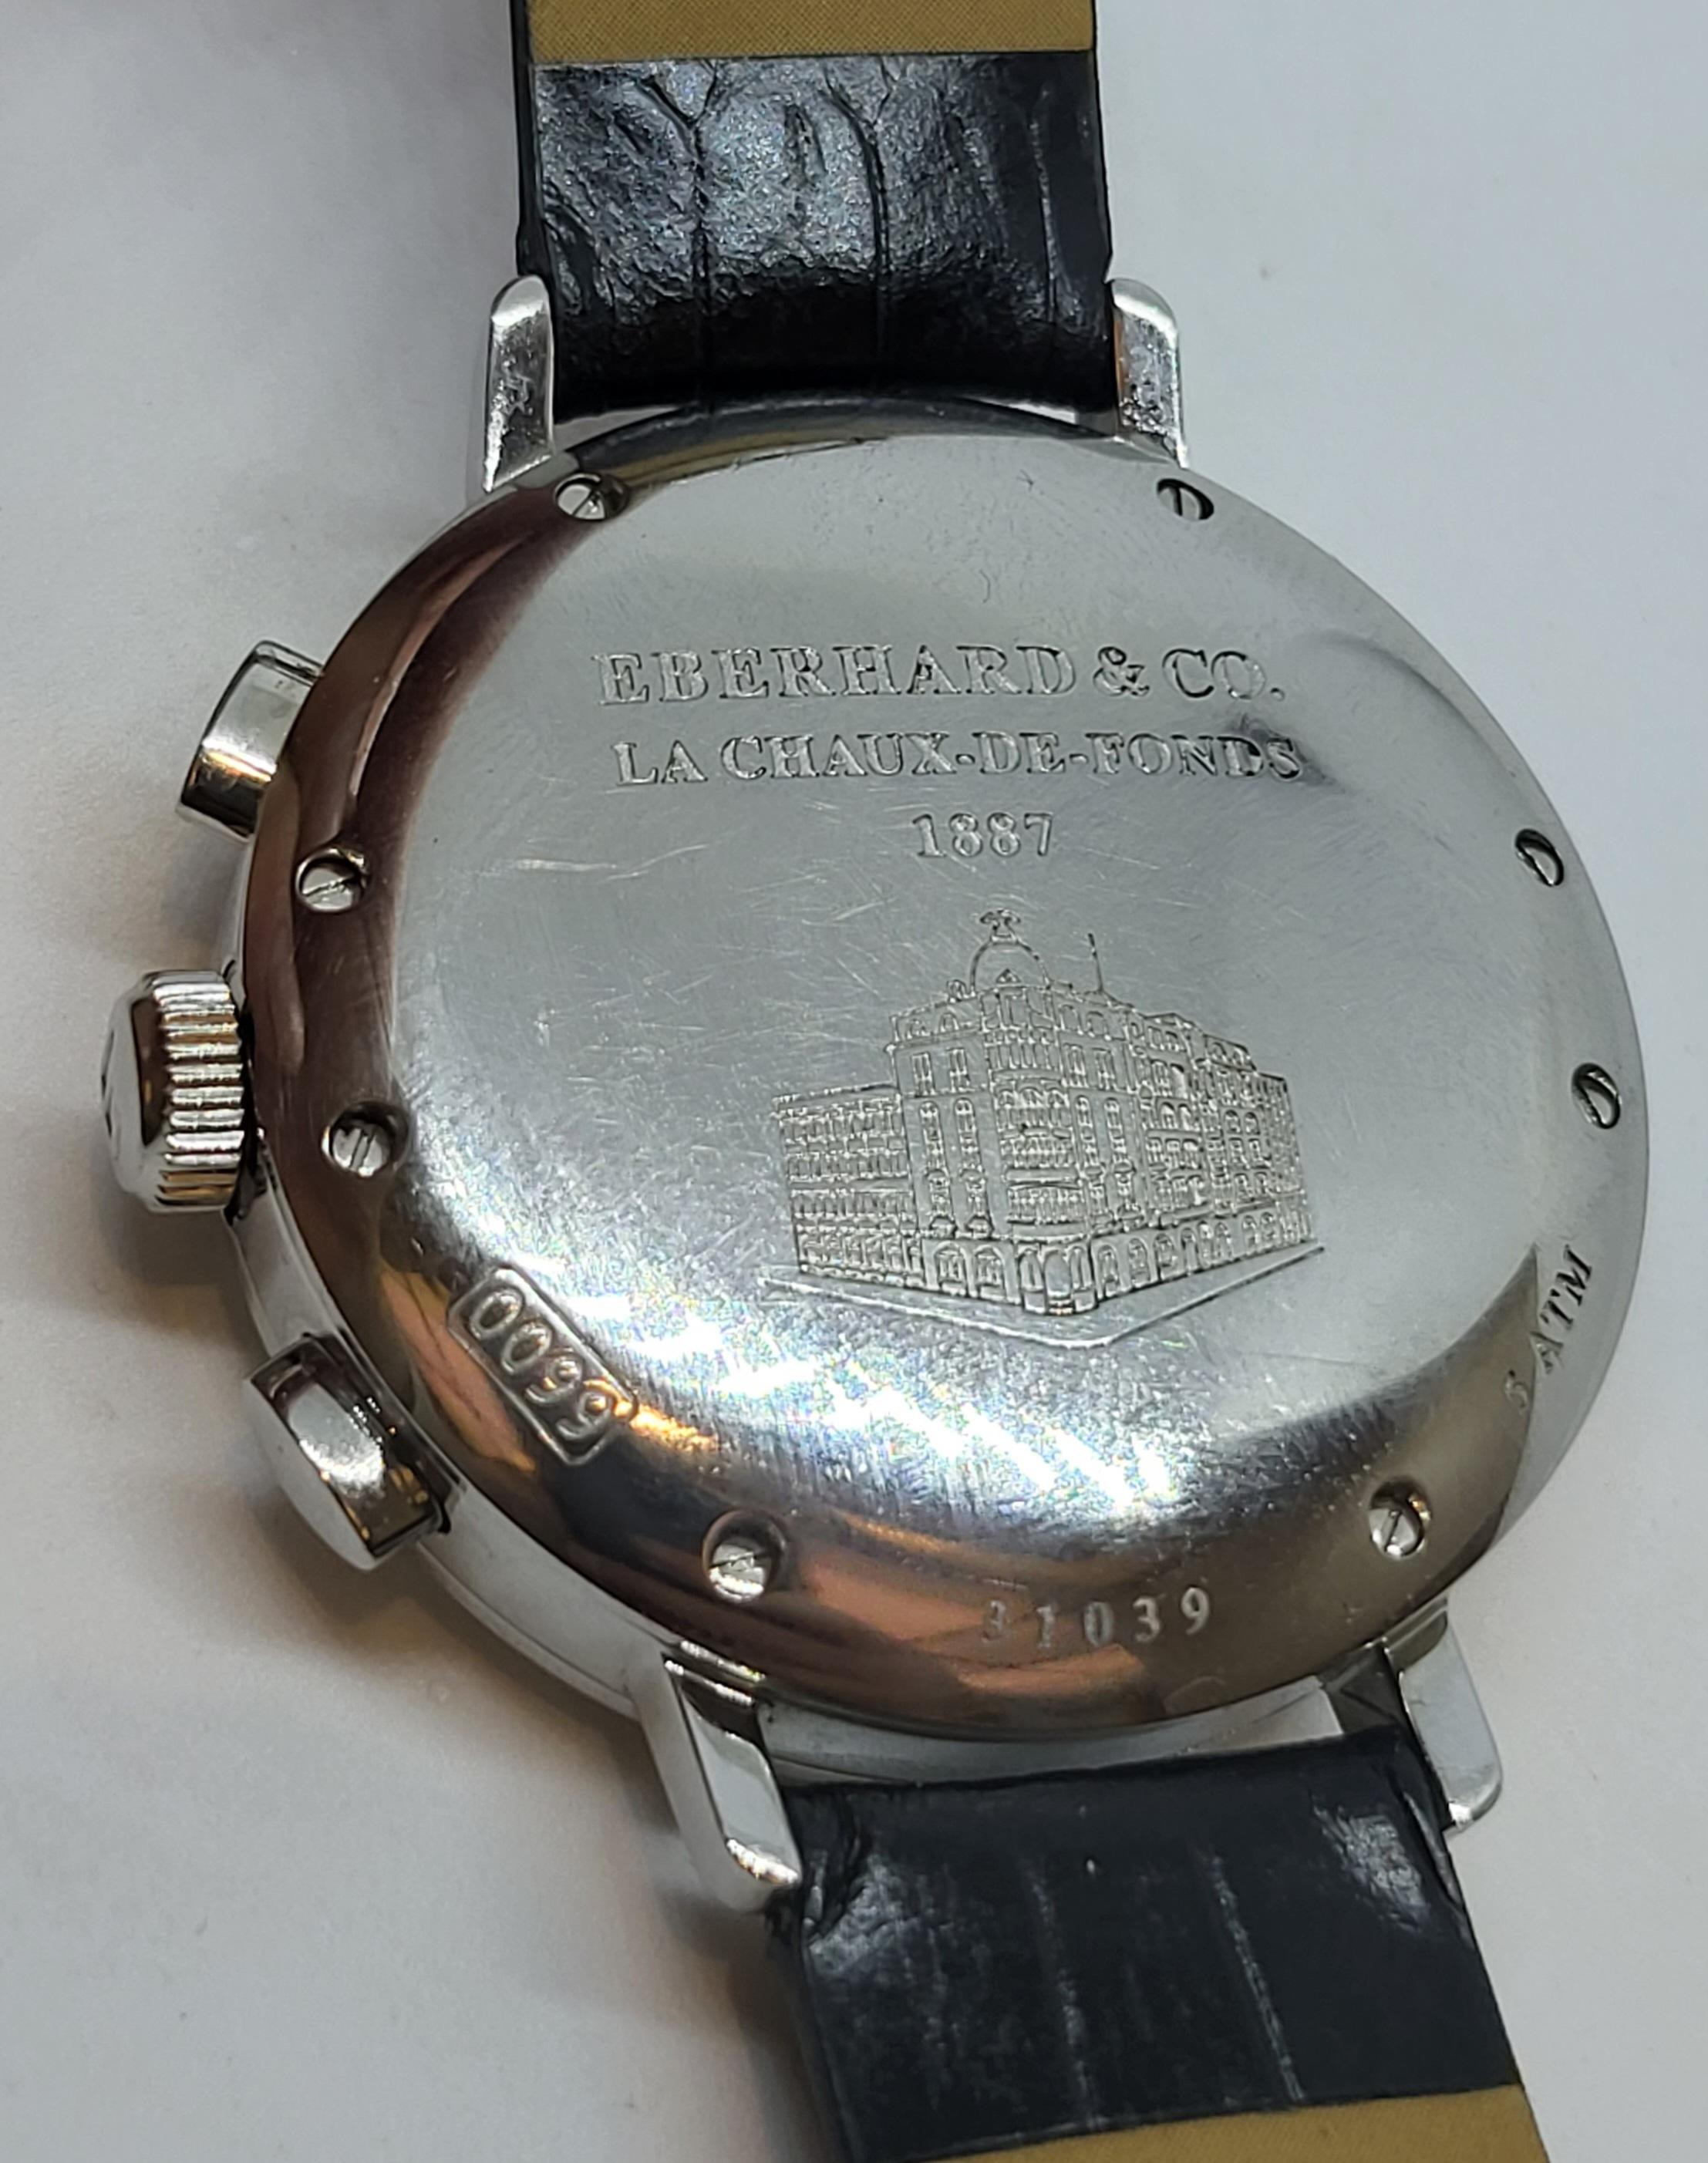 Eberhard Wrist Watch 31039, Automatic Automatic Winding Triple Moon Chronograph 8